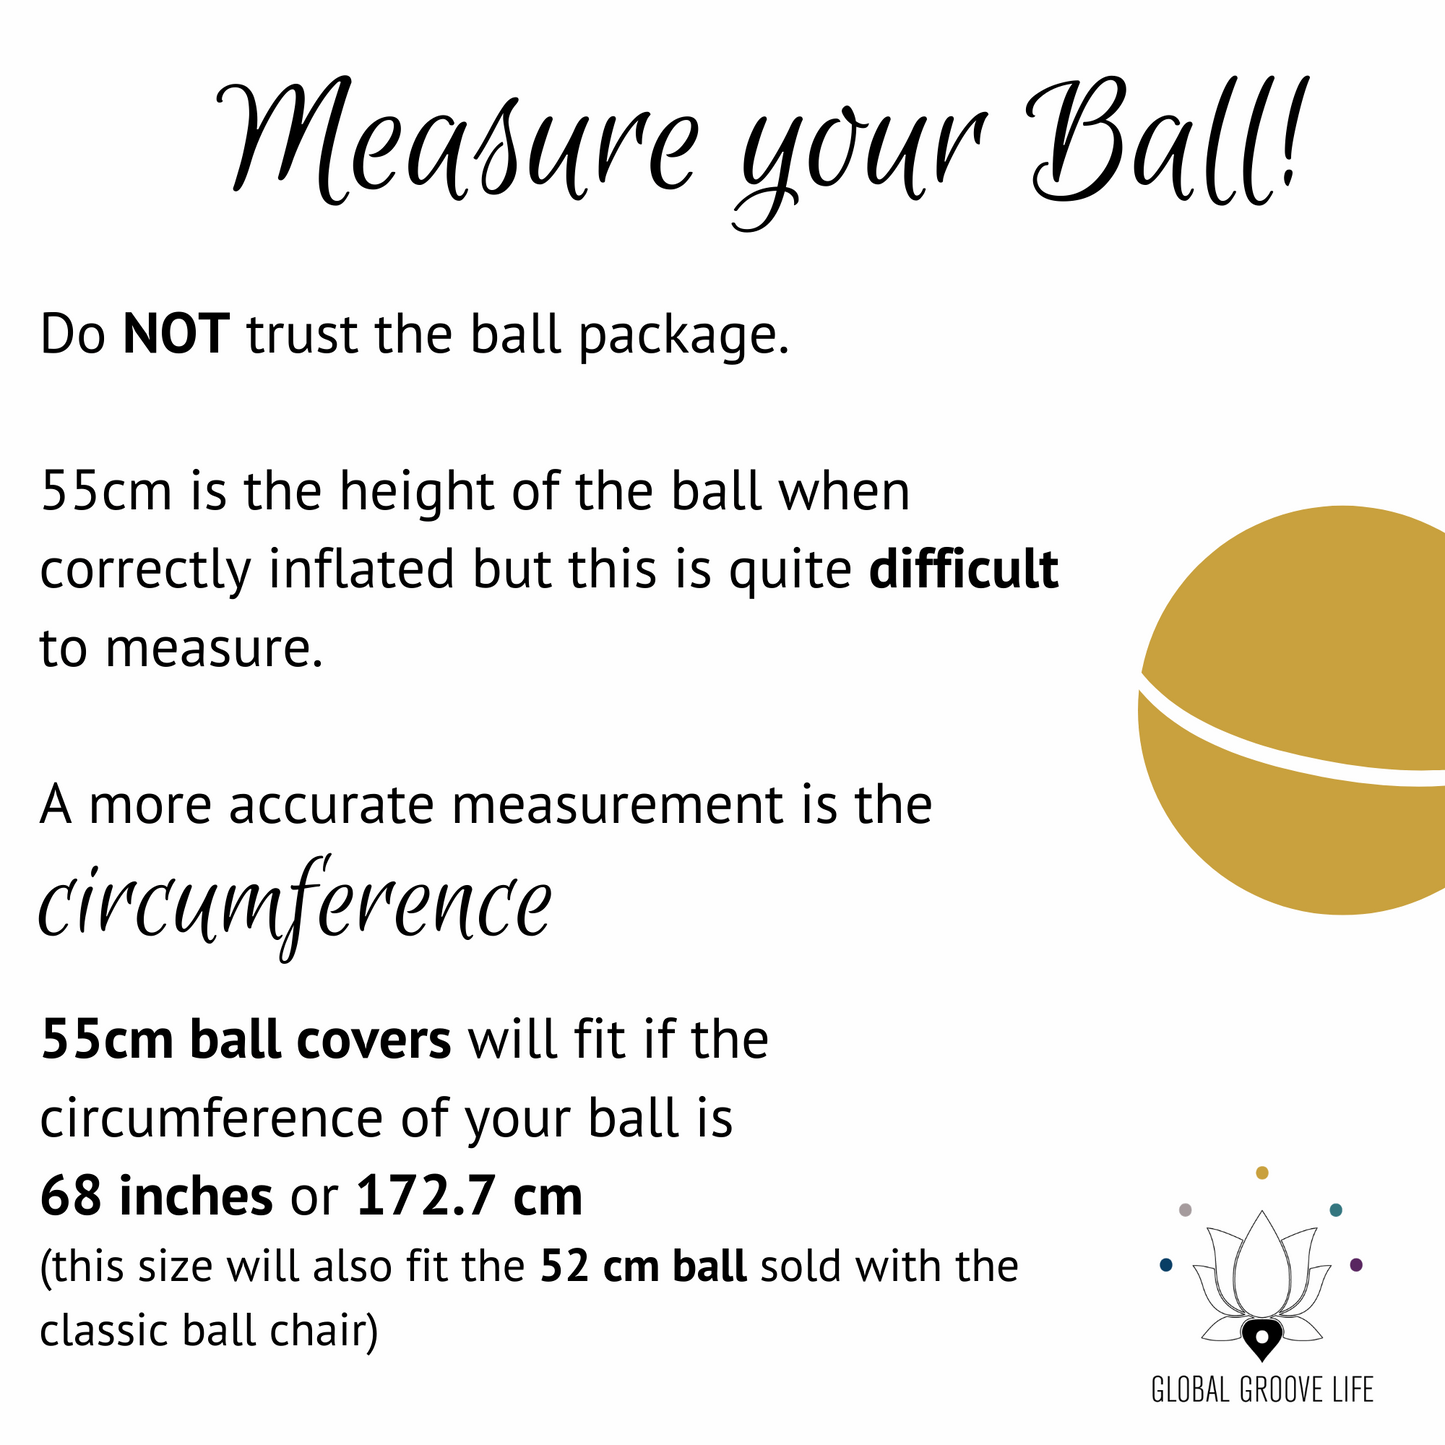 55cm Balance Ball / Yoga Ball Cover: Cream